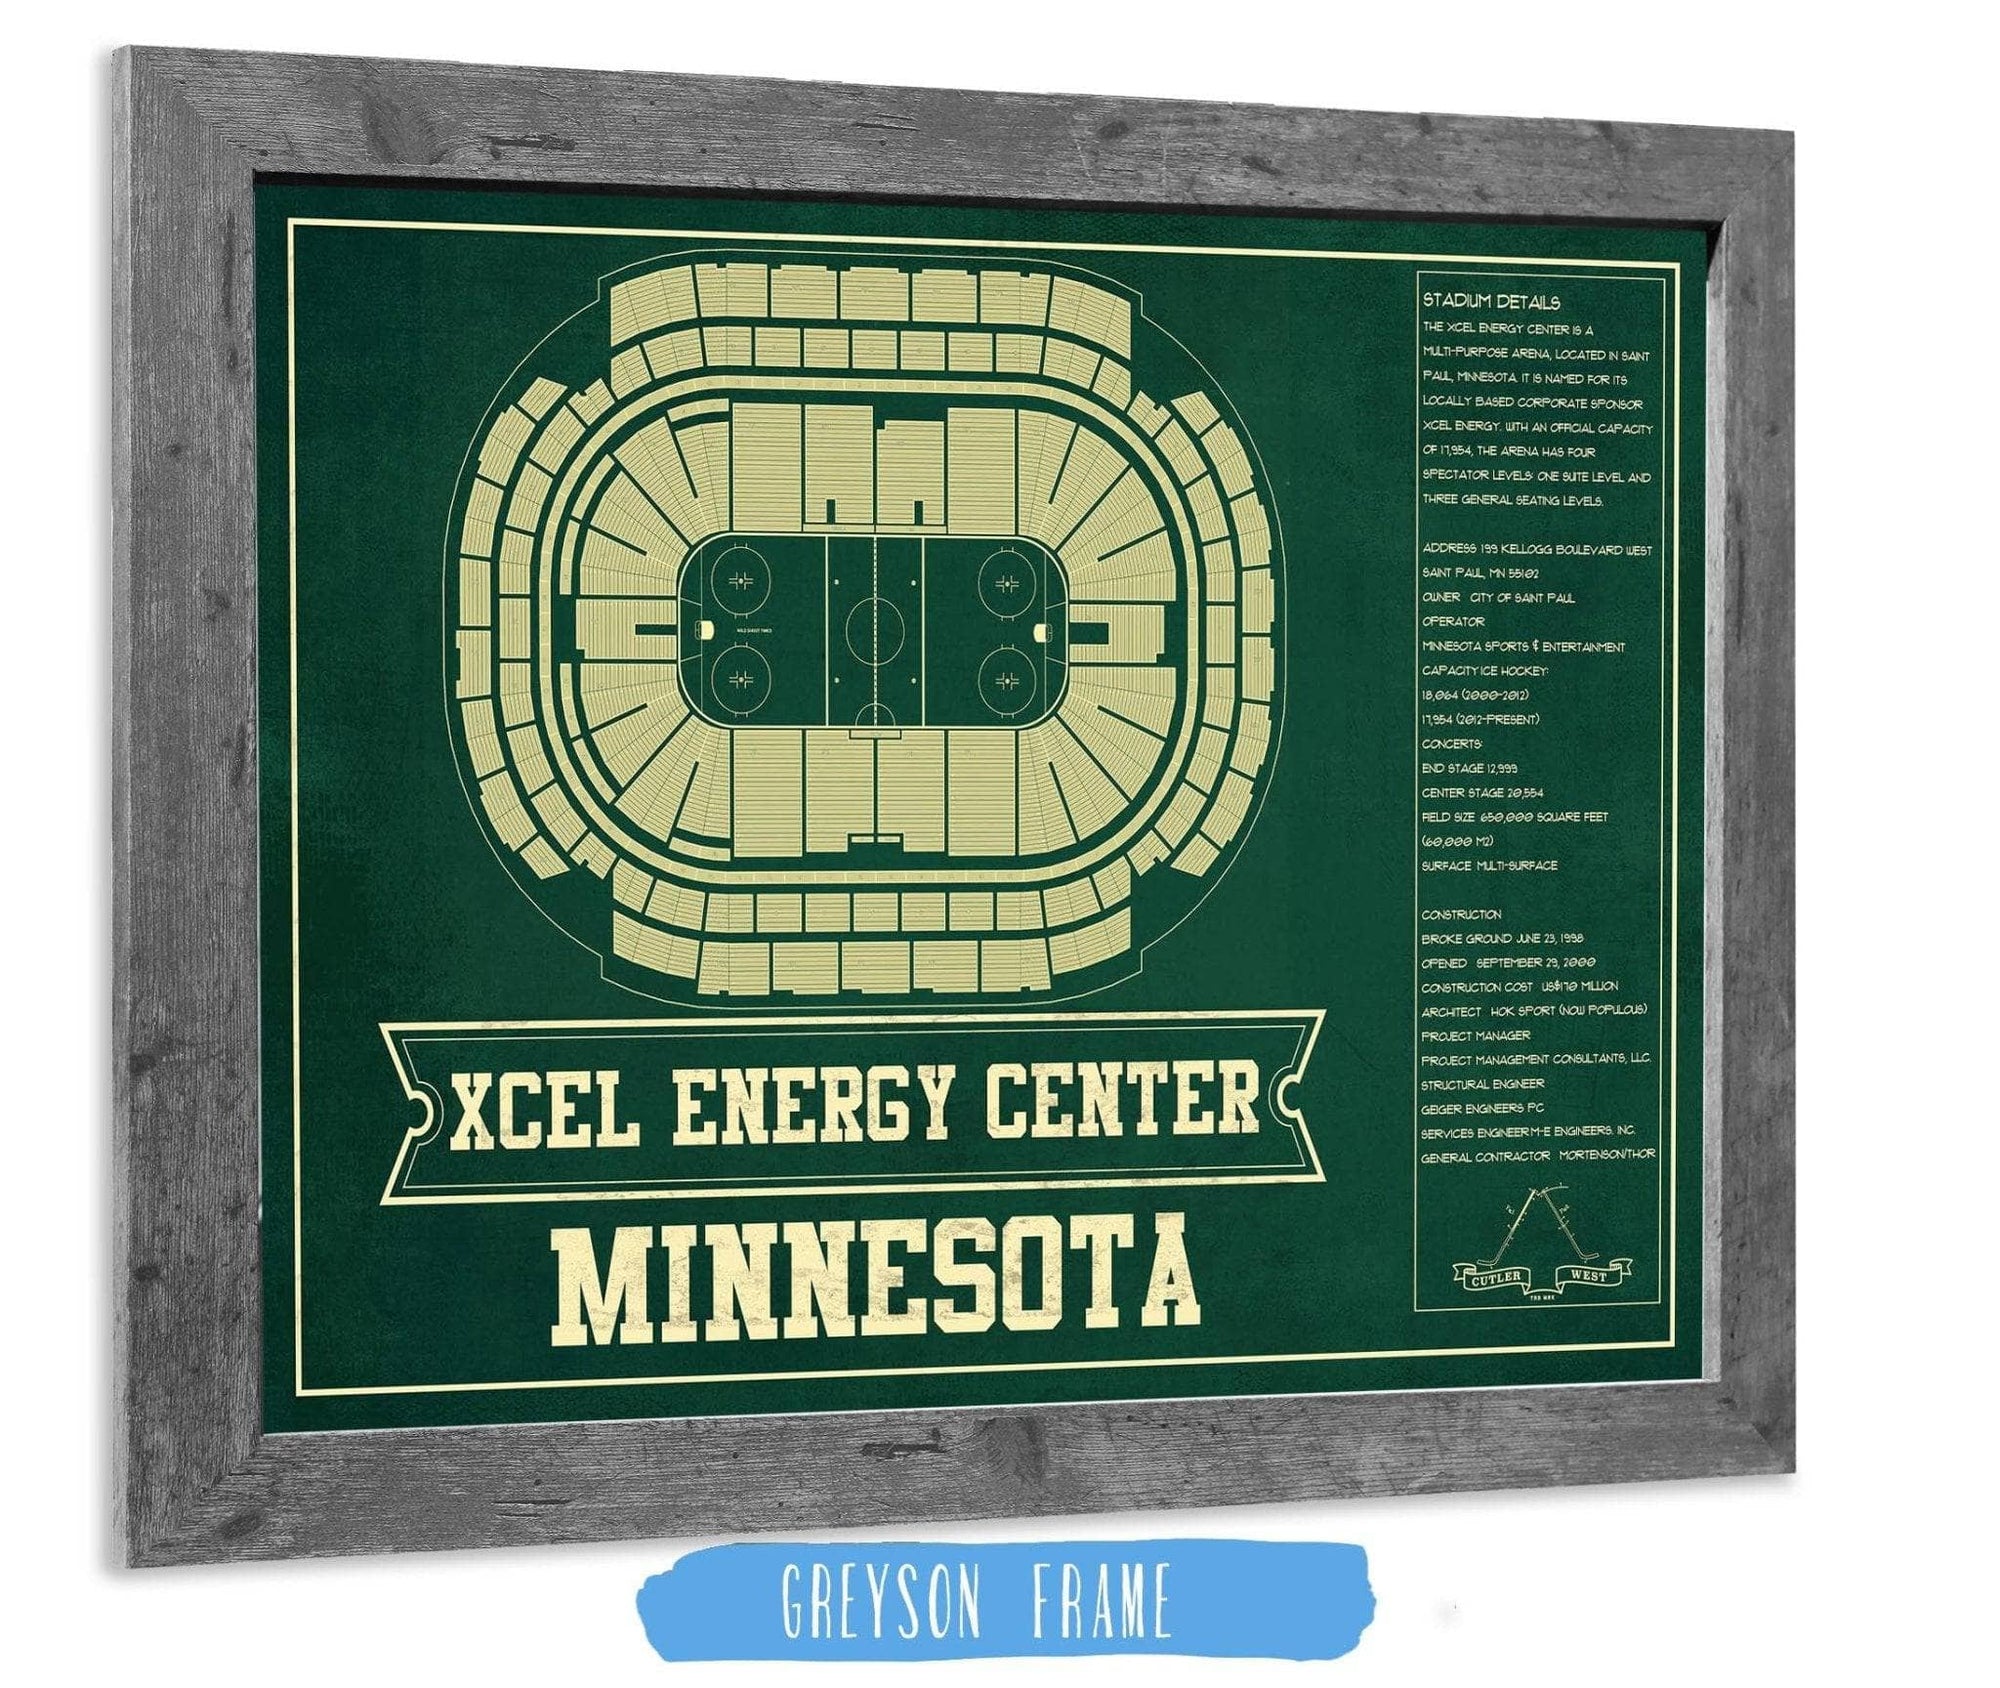 Cutler West 14" x 11" / Greyson Frame Minnesota Wild Team Colors - Xcel Energy Center Vintage Hockey Blueprint NHL Print 659981782-TEAM